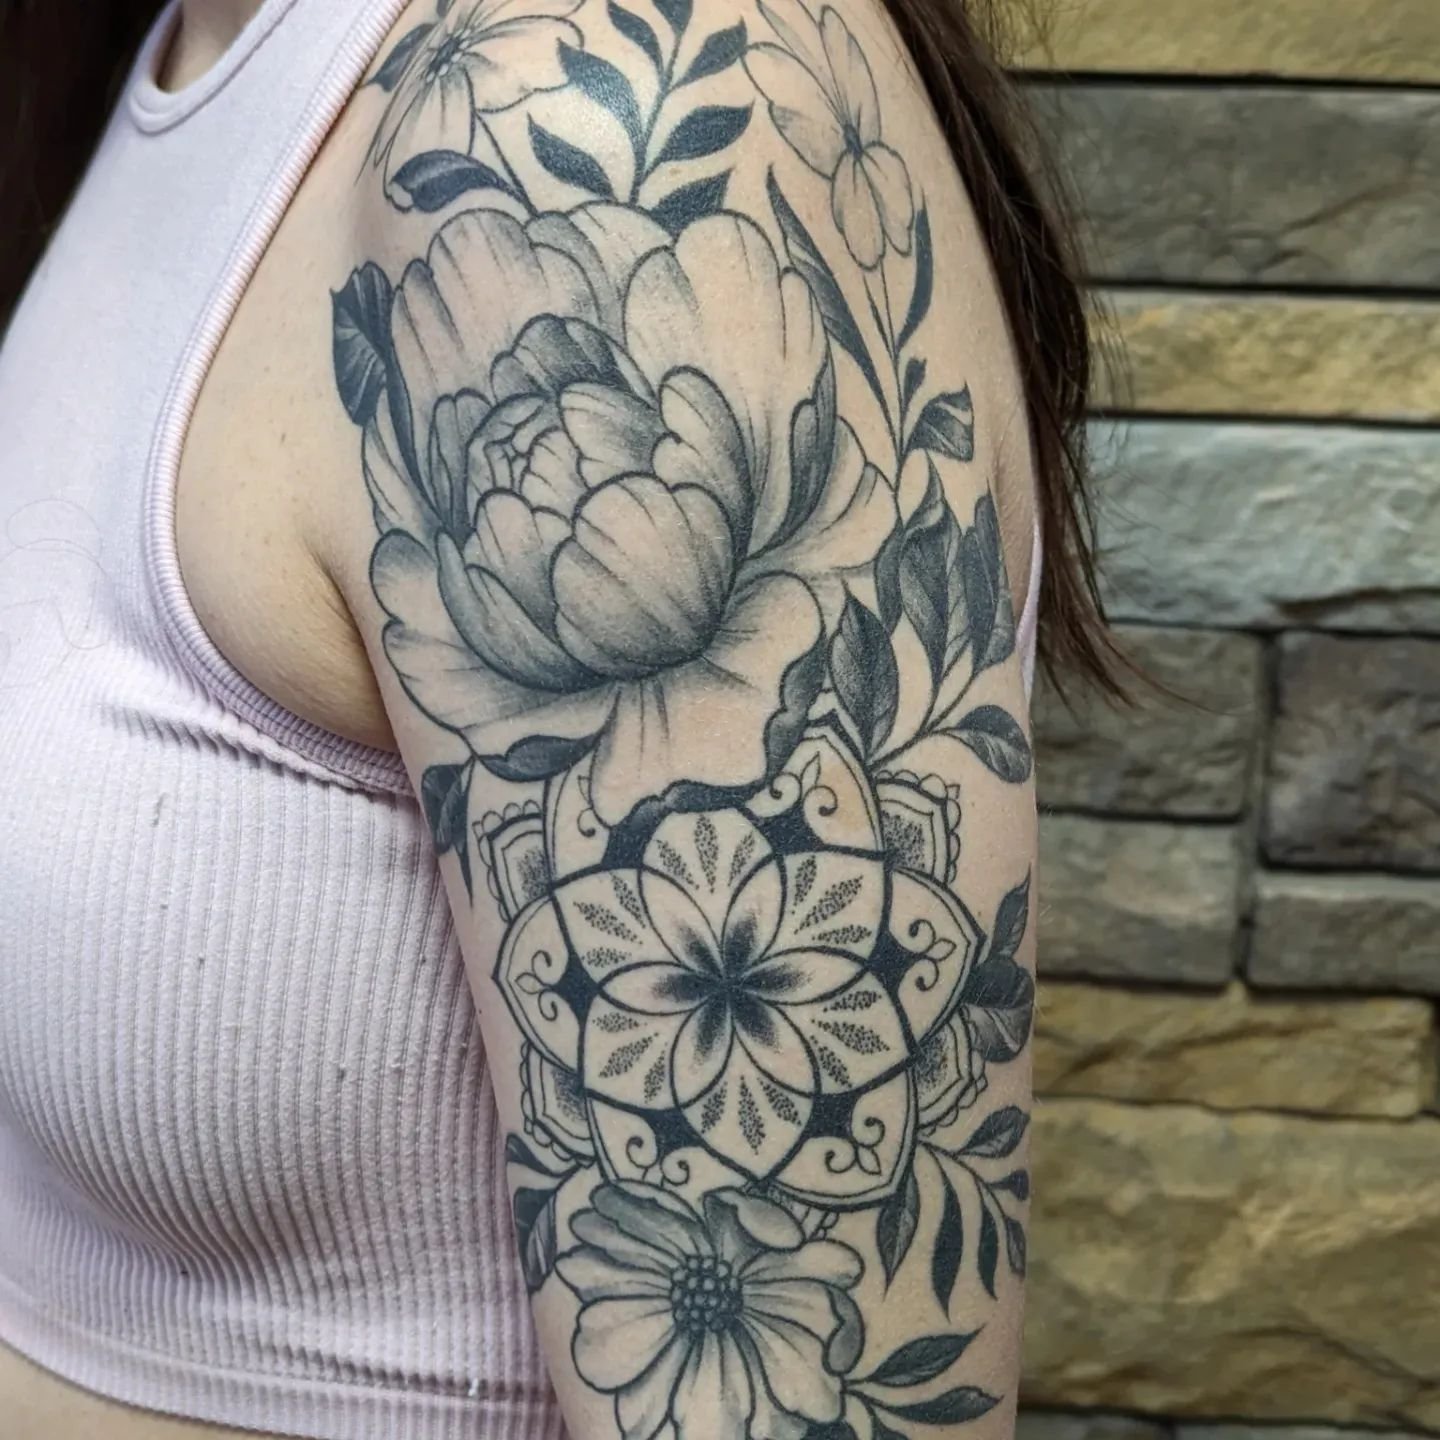 Custom mandala and flower half sleeve 
By: Nelson
@nelson.tattoos 
-
-
-
-
#tattoo #customtattoo #qualitytattoo #besttattoo #ottawatattoo #orleansontario #orleansontario #ottawa #blackandgreytattoo #flowertattoo #art #design #mandala #originalart #or